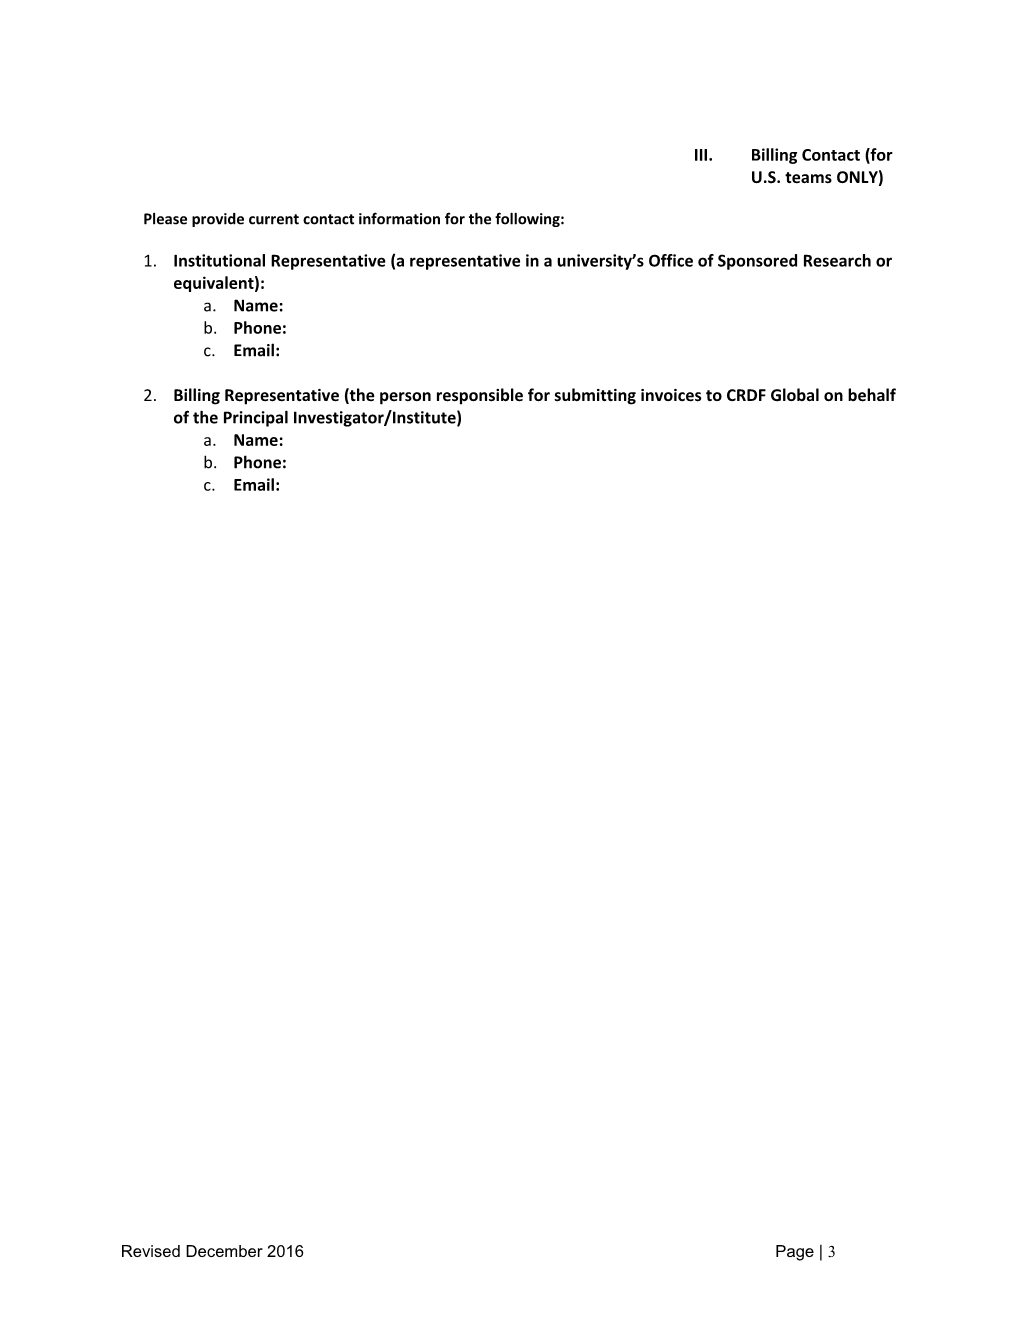 Form 710: Standard Project Status Report - Variant CGP01